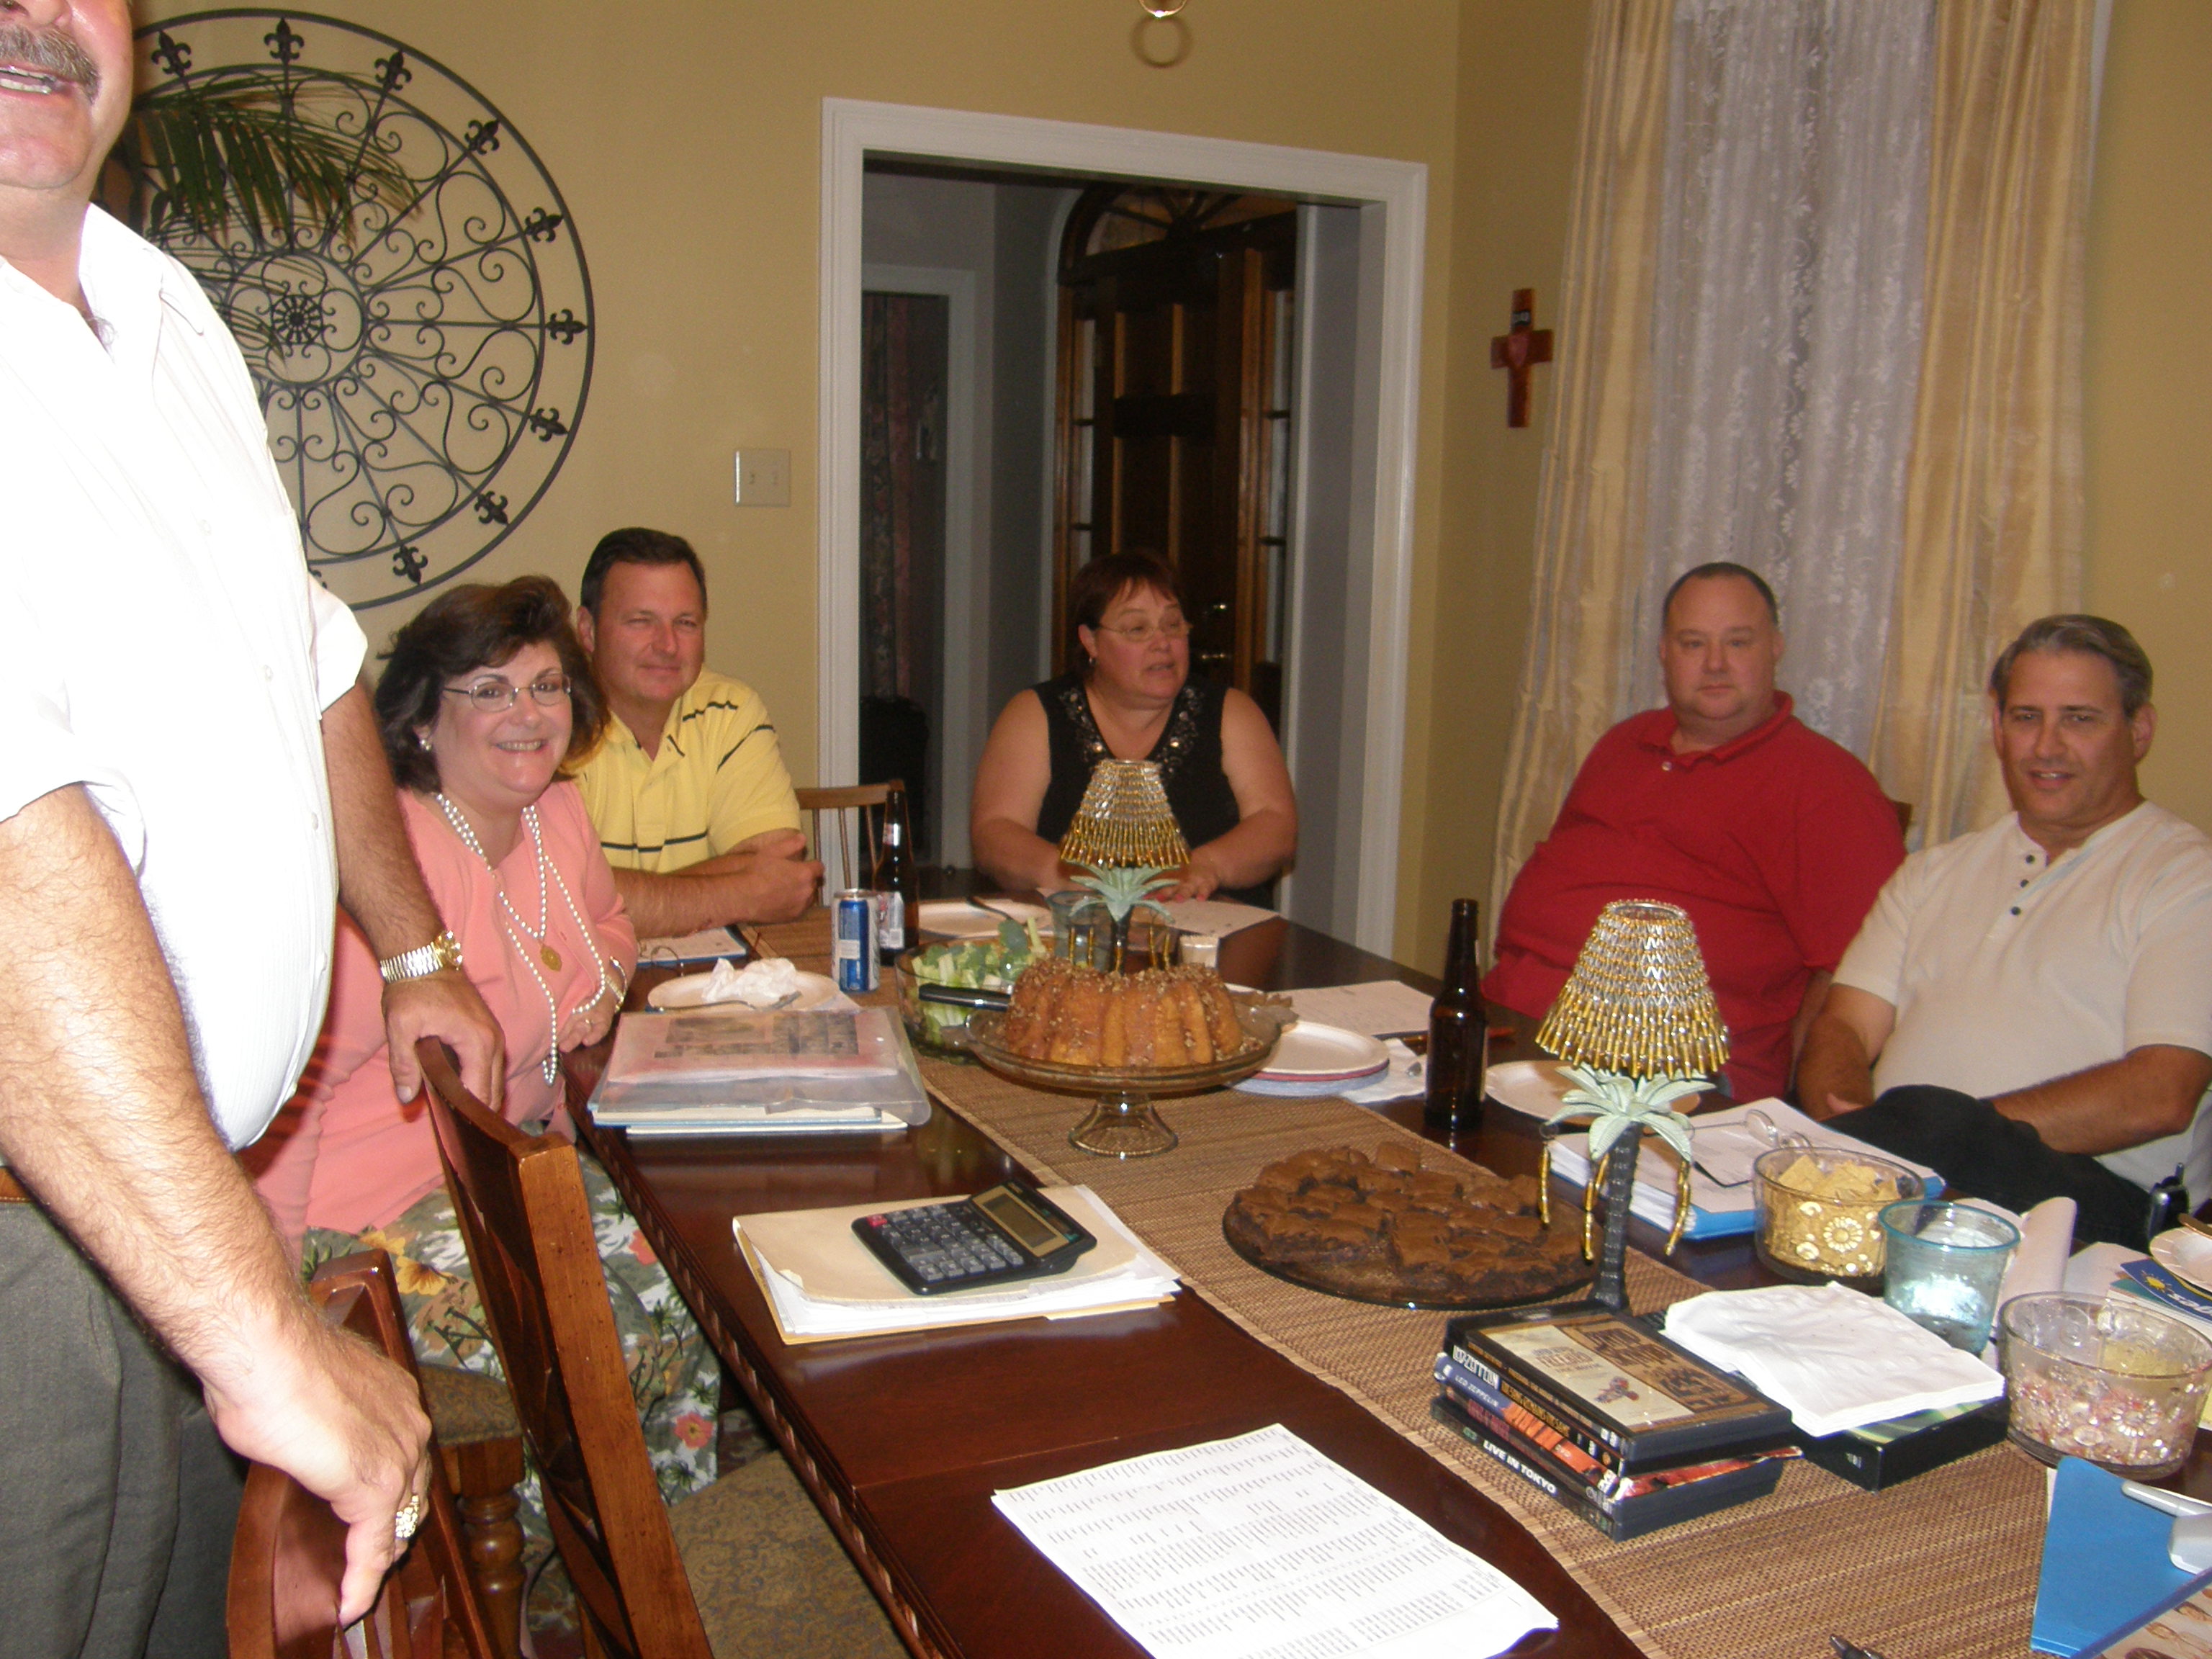 July 12 meeting - Nob, Karen, Jeff, Kim, Phillip and Randy